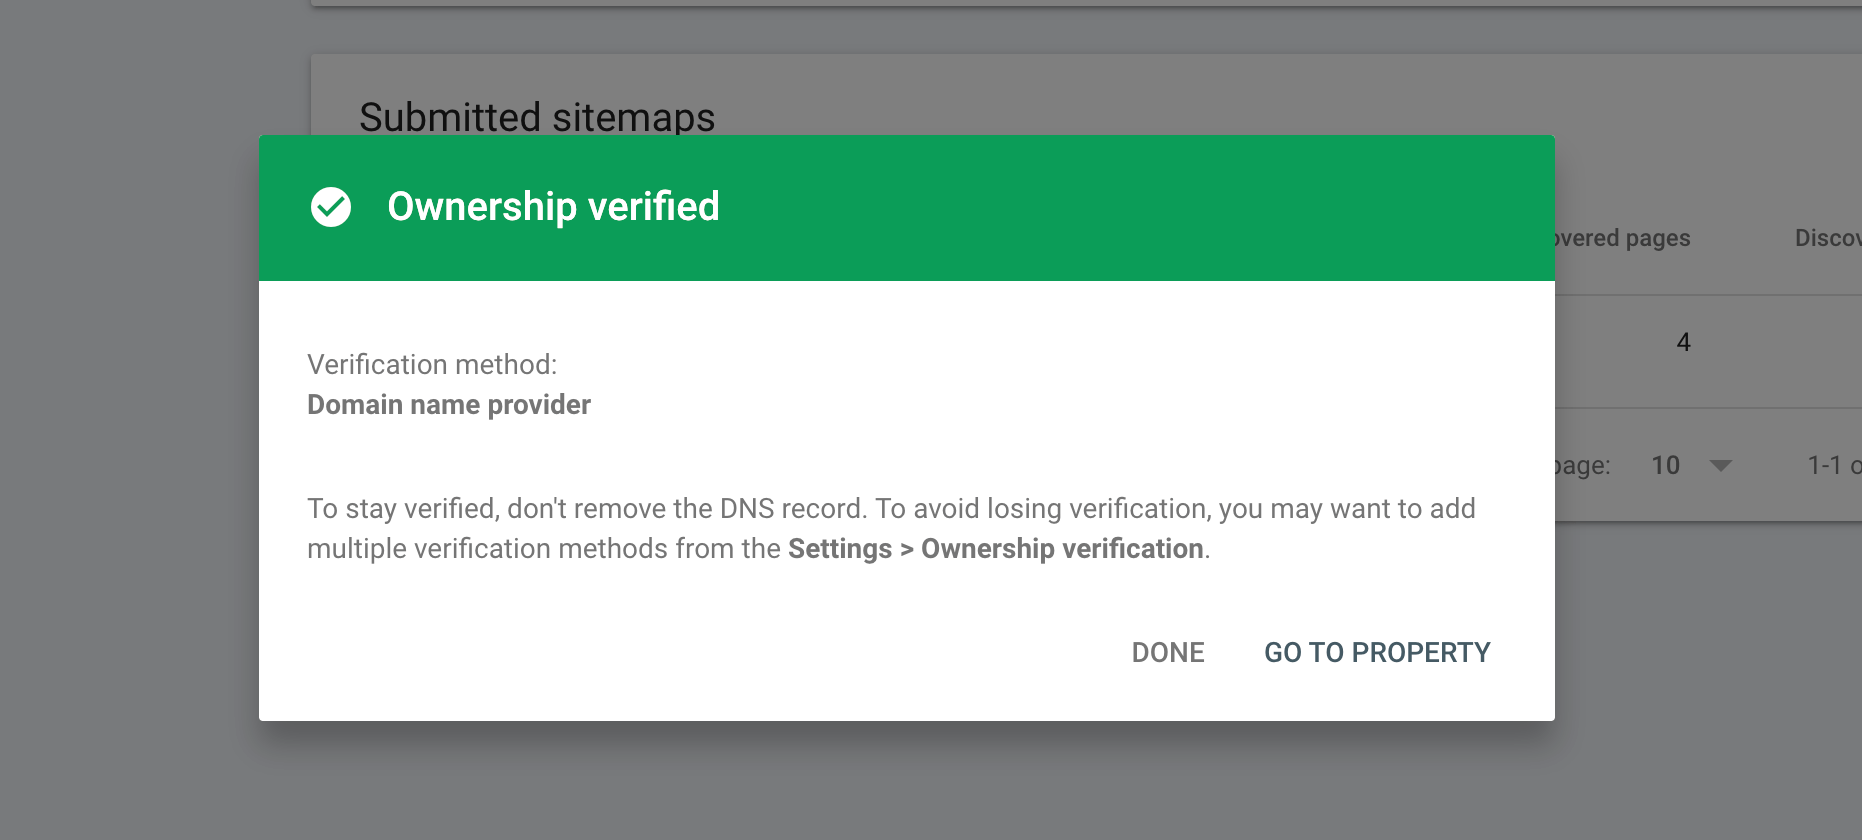 Ownership verified